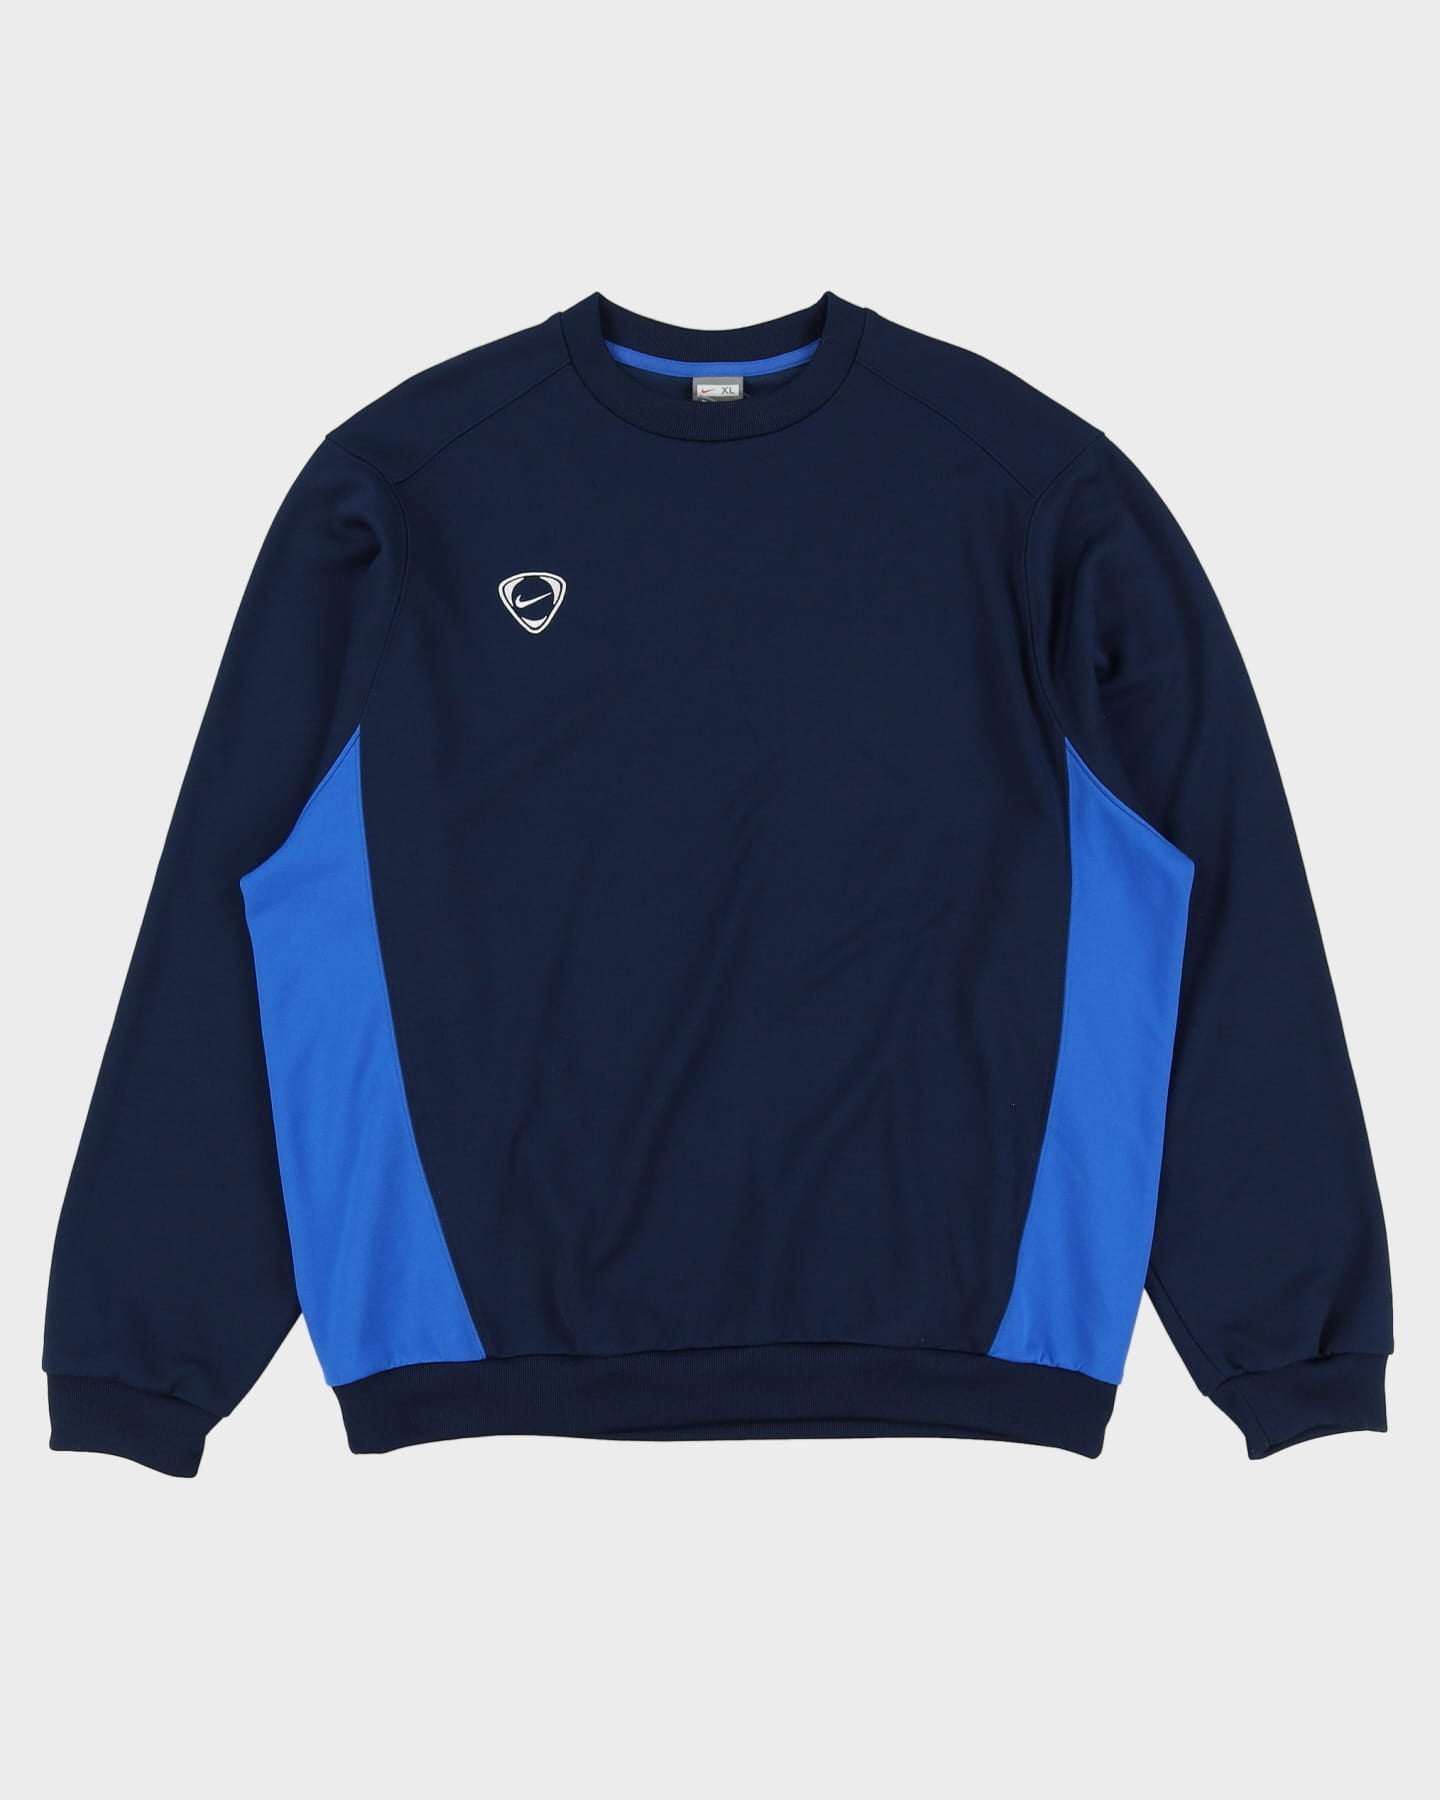 00s Nike Oversized Navy / Blue Football Training Sweatshirt - XL